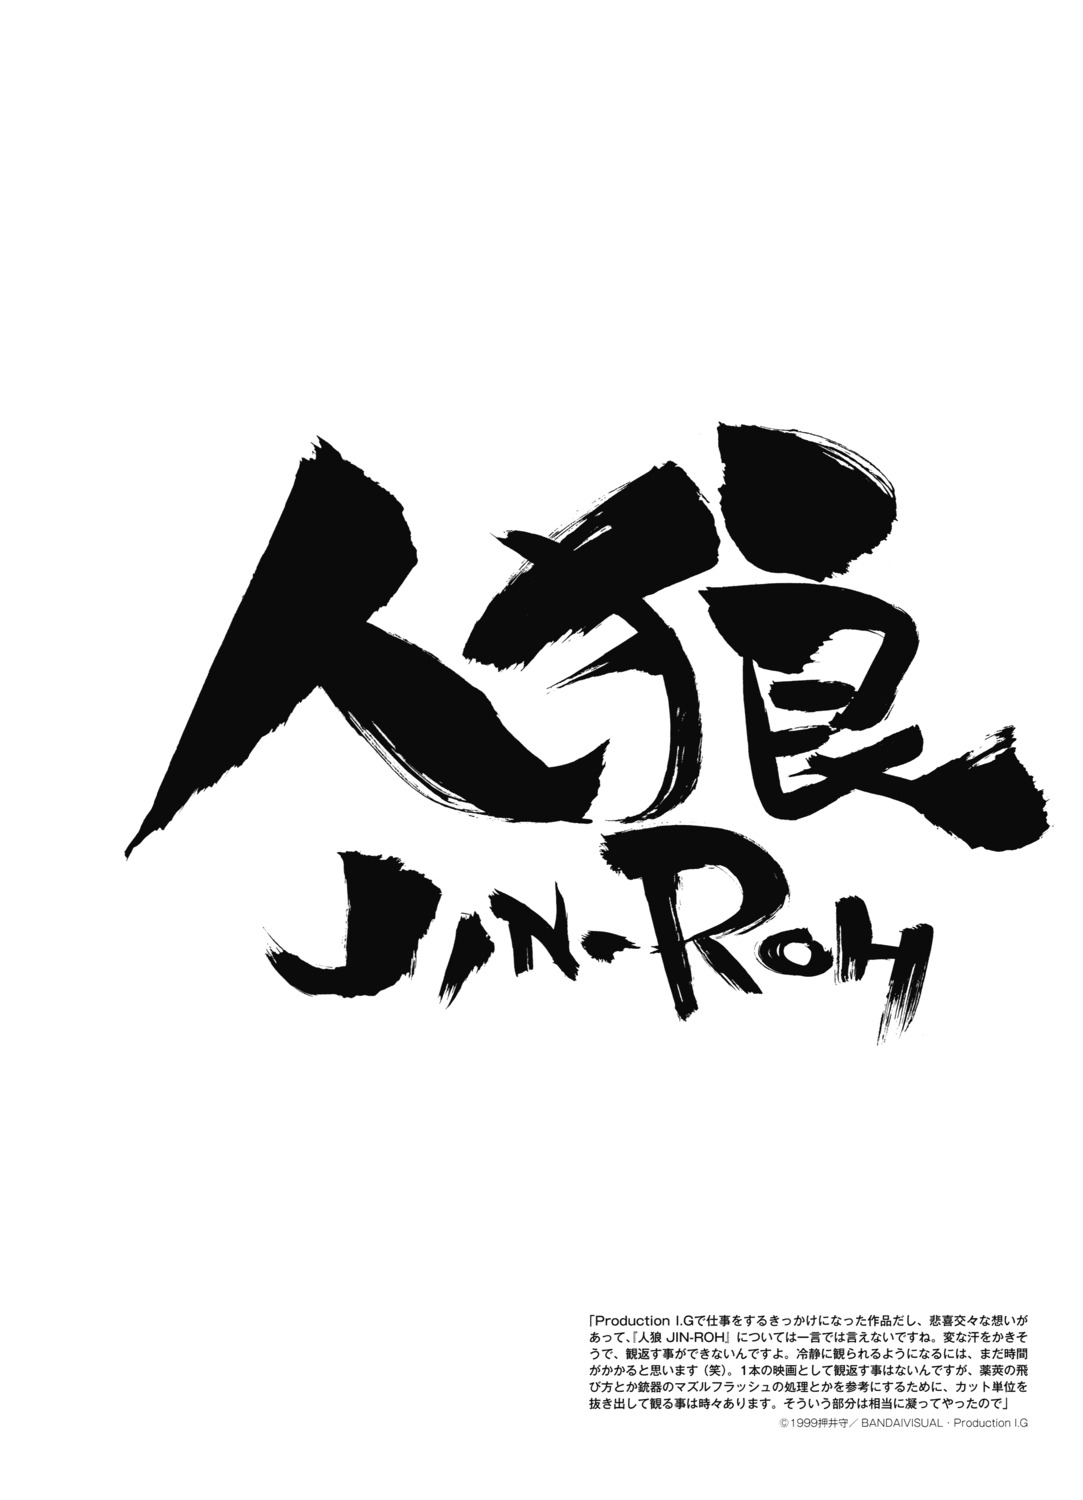 jin-roh logo text